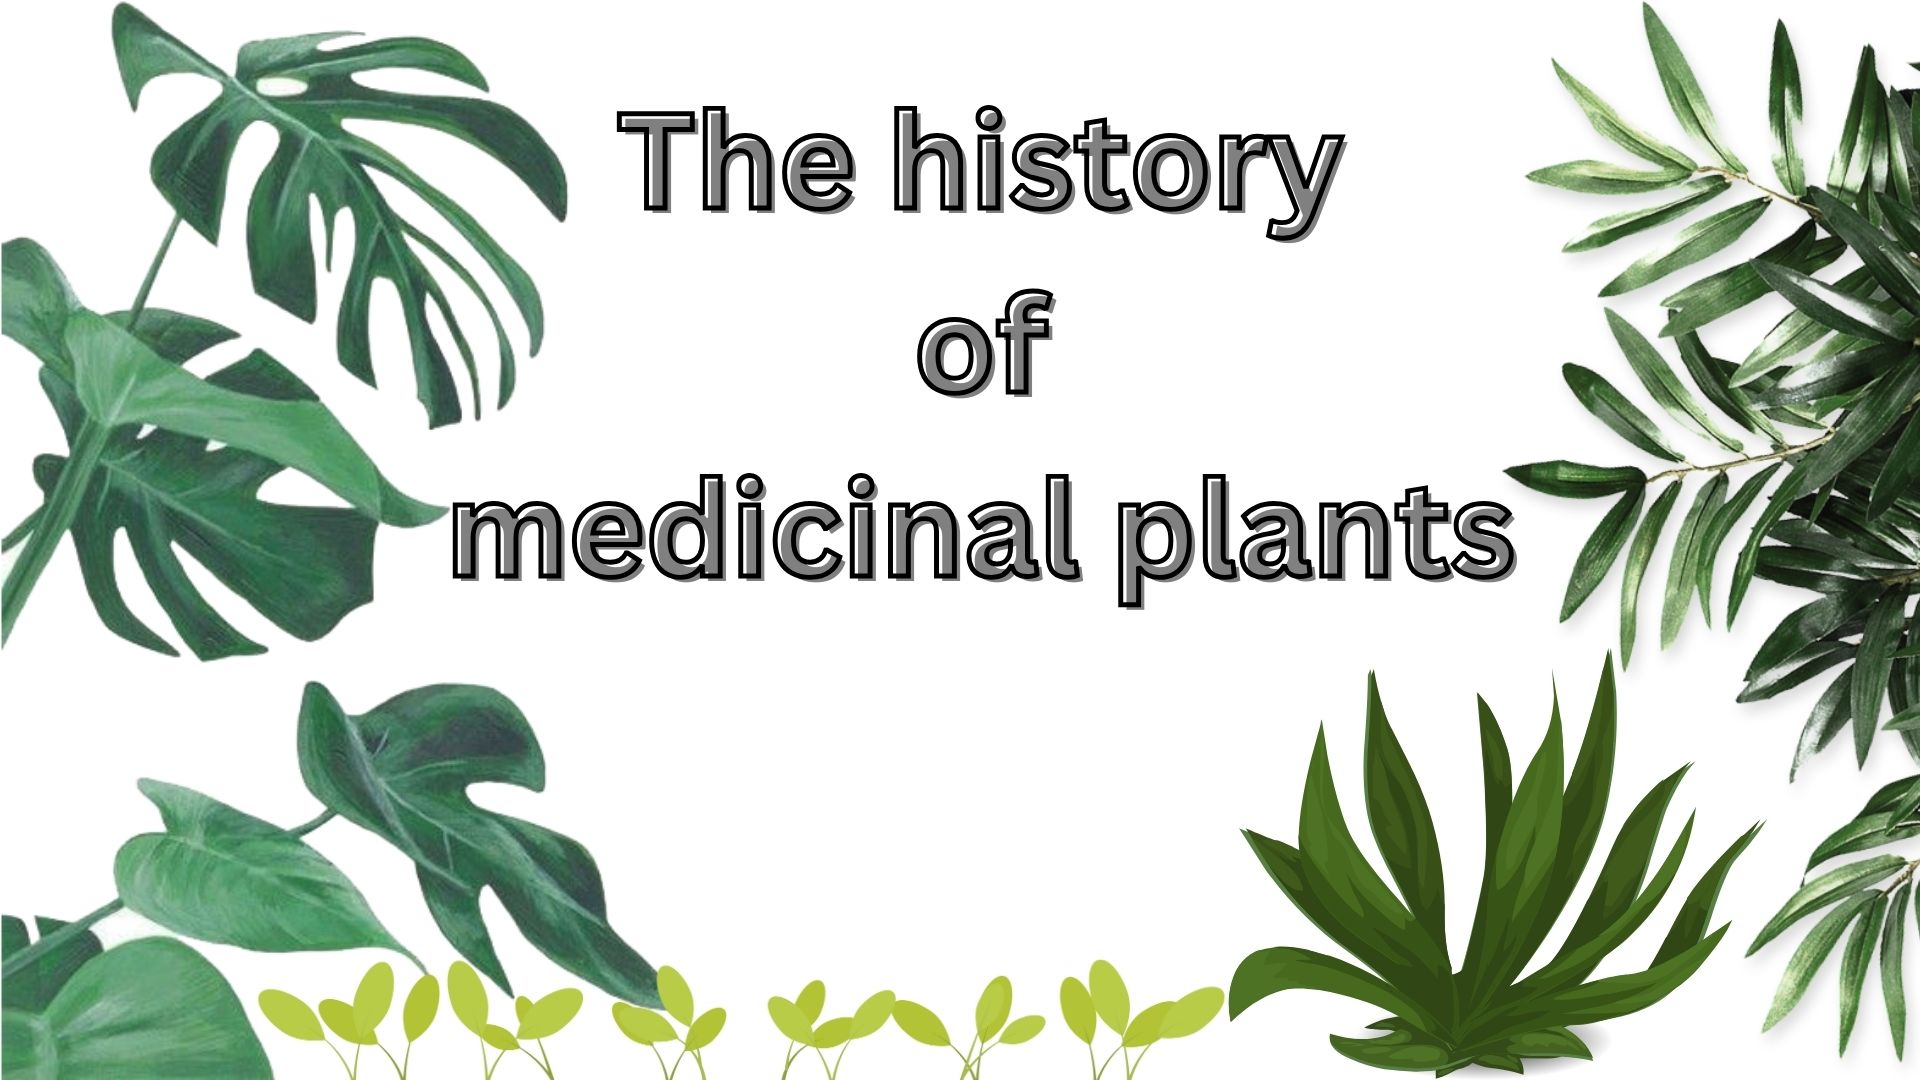 The history of medicinal plants